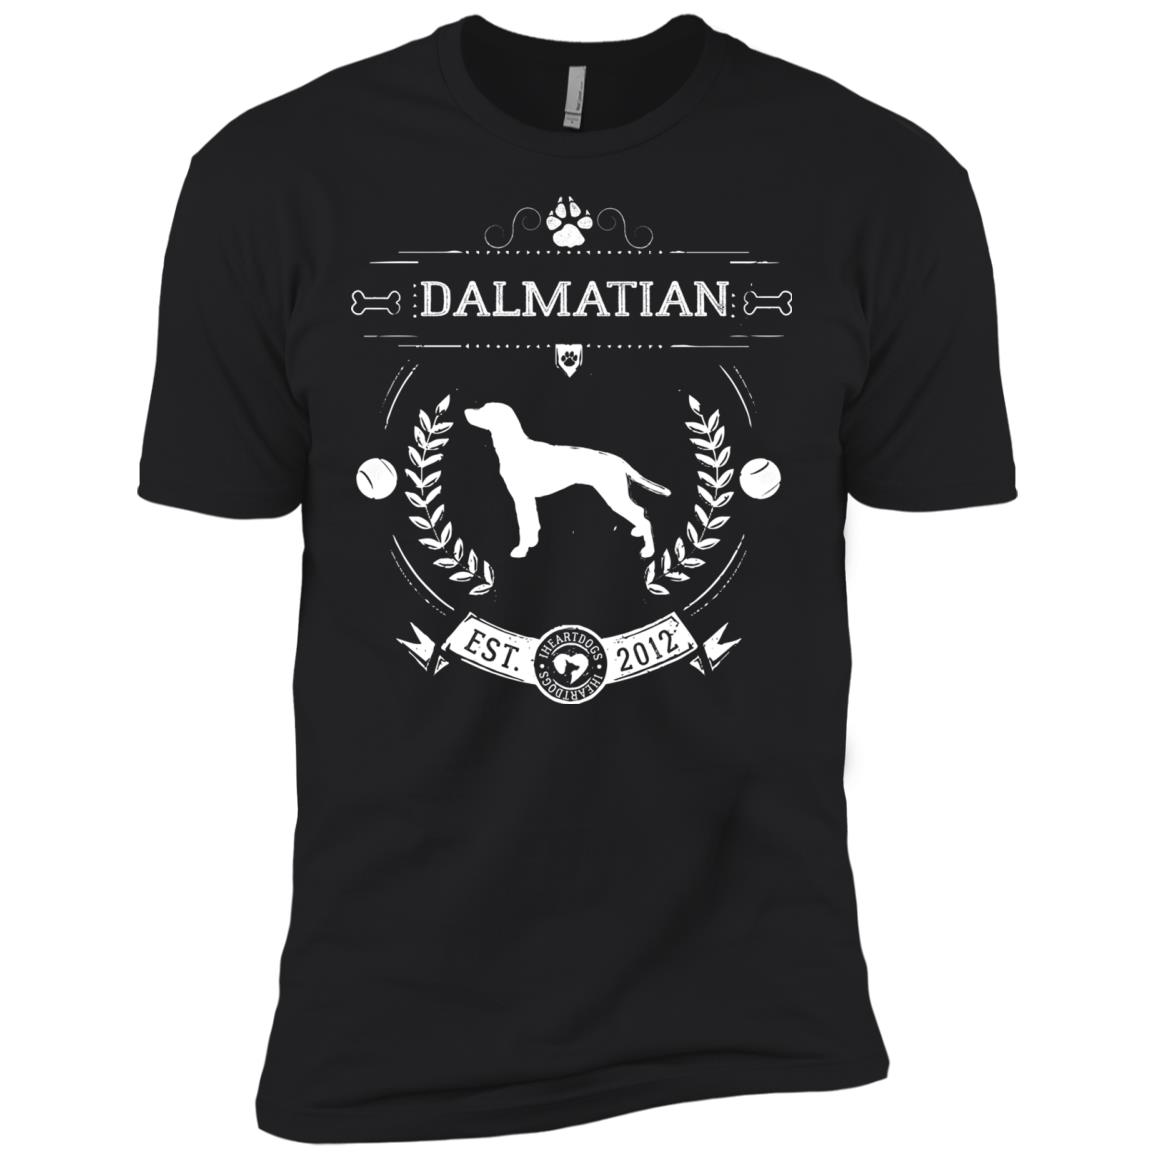 Varsity Dalmatian Premium Tee Black